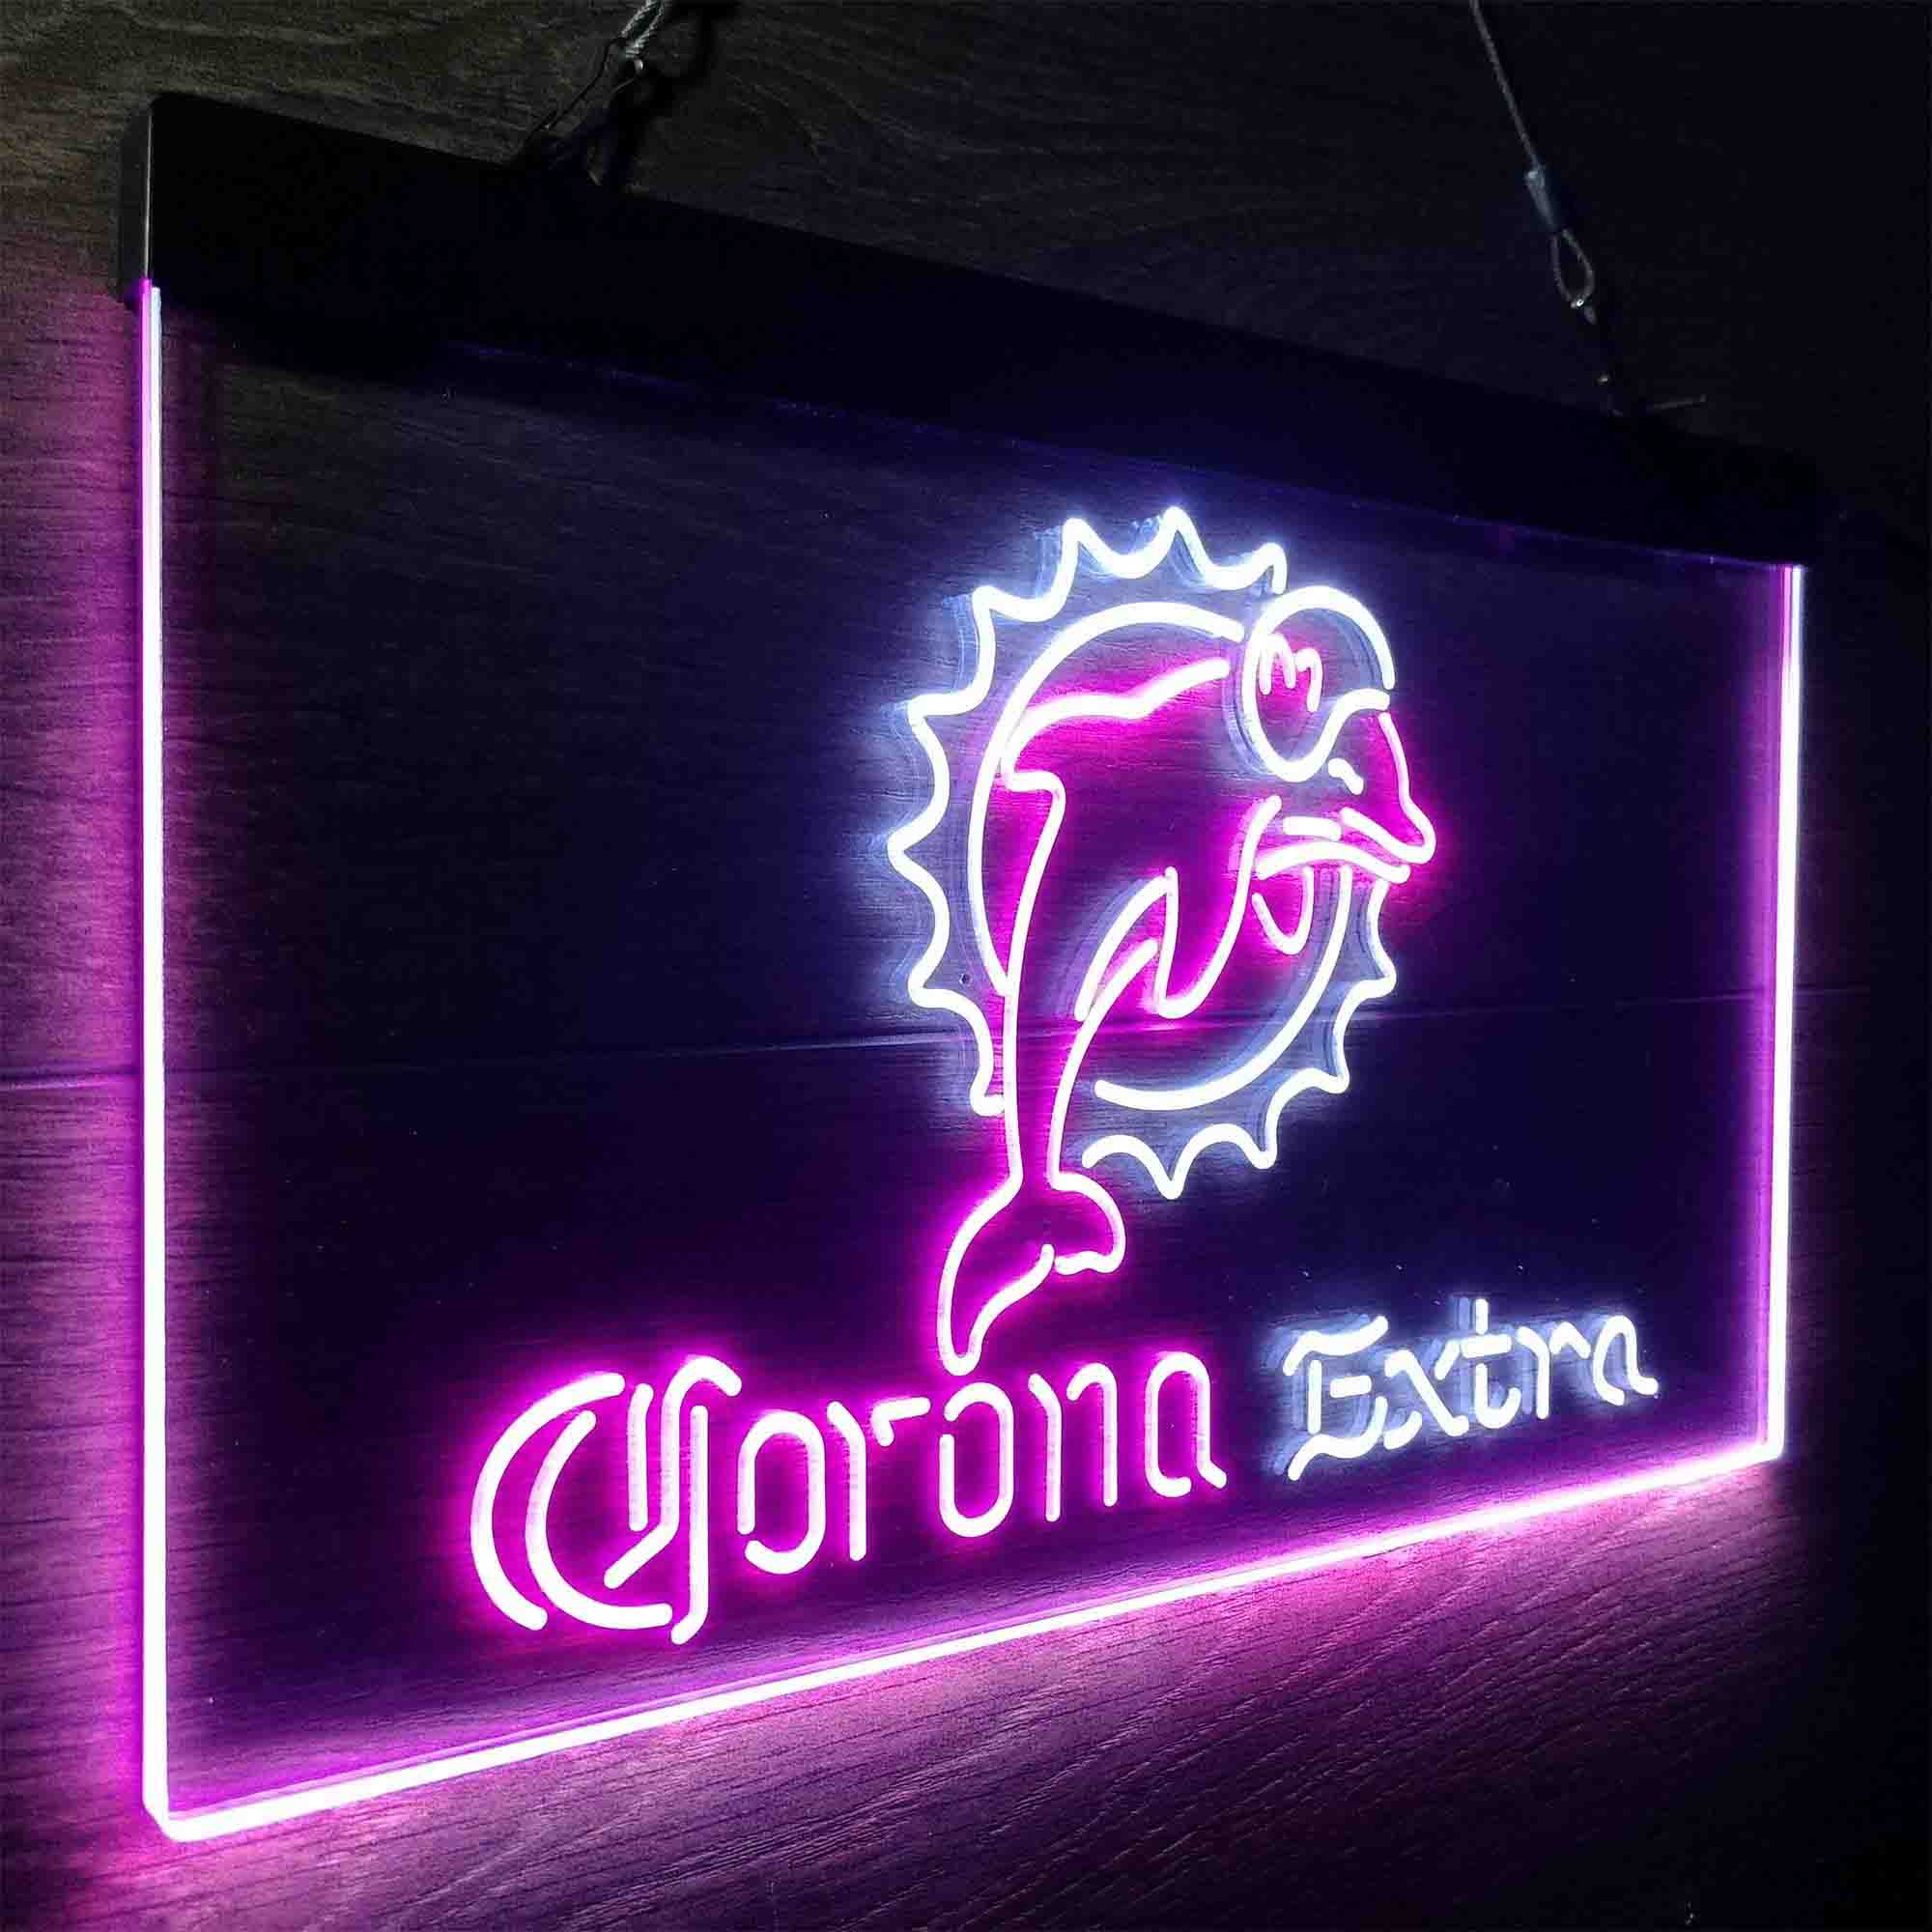 Corona Extra Bar Miami Dolphins Est. 1966 LED Neon Sign